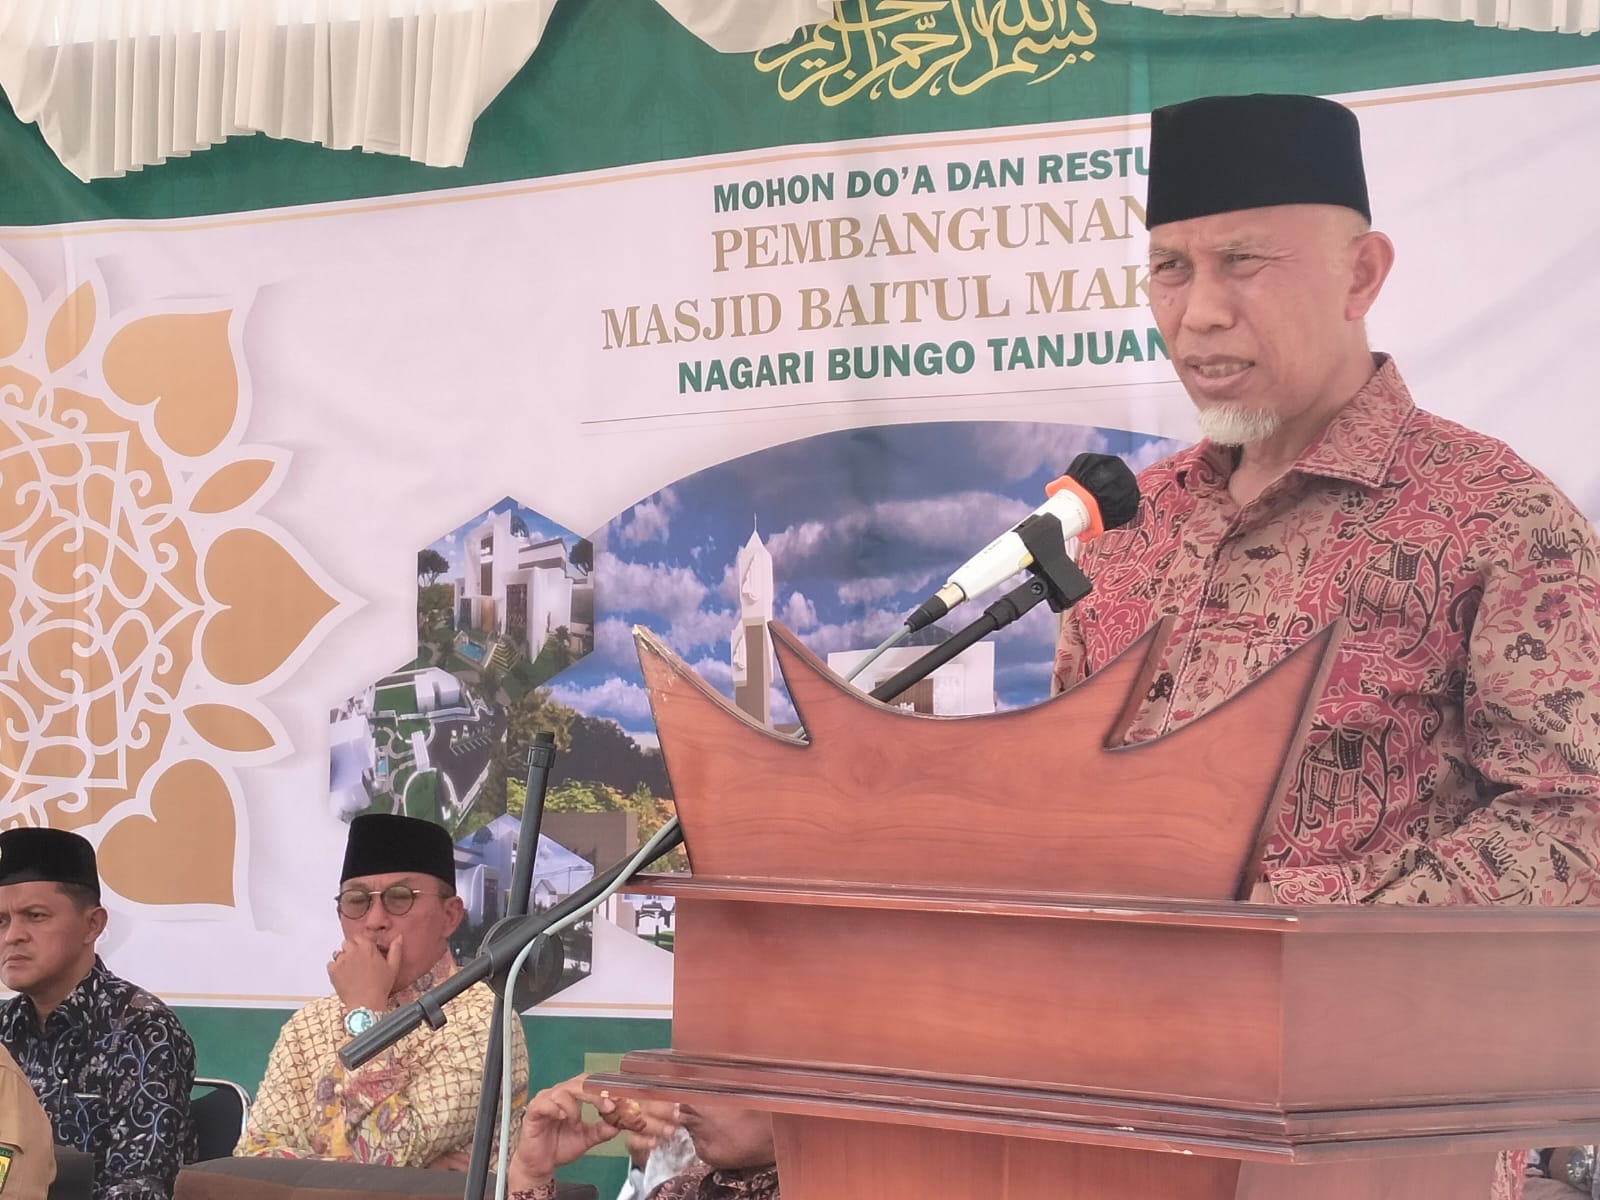 Wujud Kerjasama Ranah dan rantau, Gubernur Sumbar Resmikan Pembangunan Masjid Baitul Makmur Bungo Tanjuang